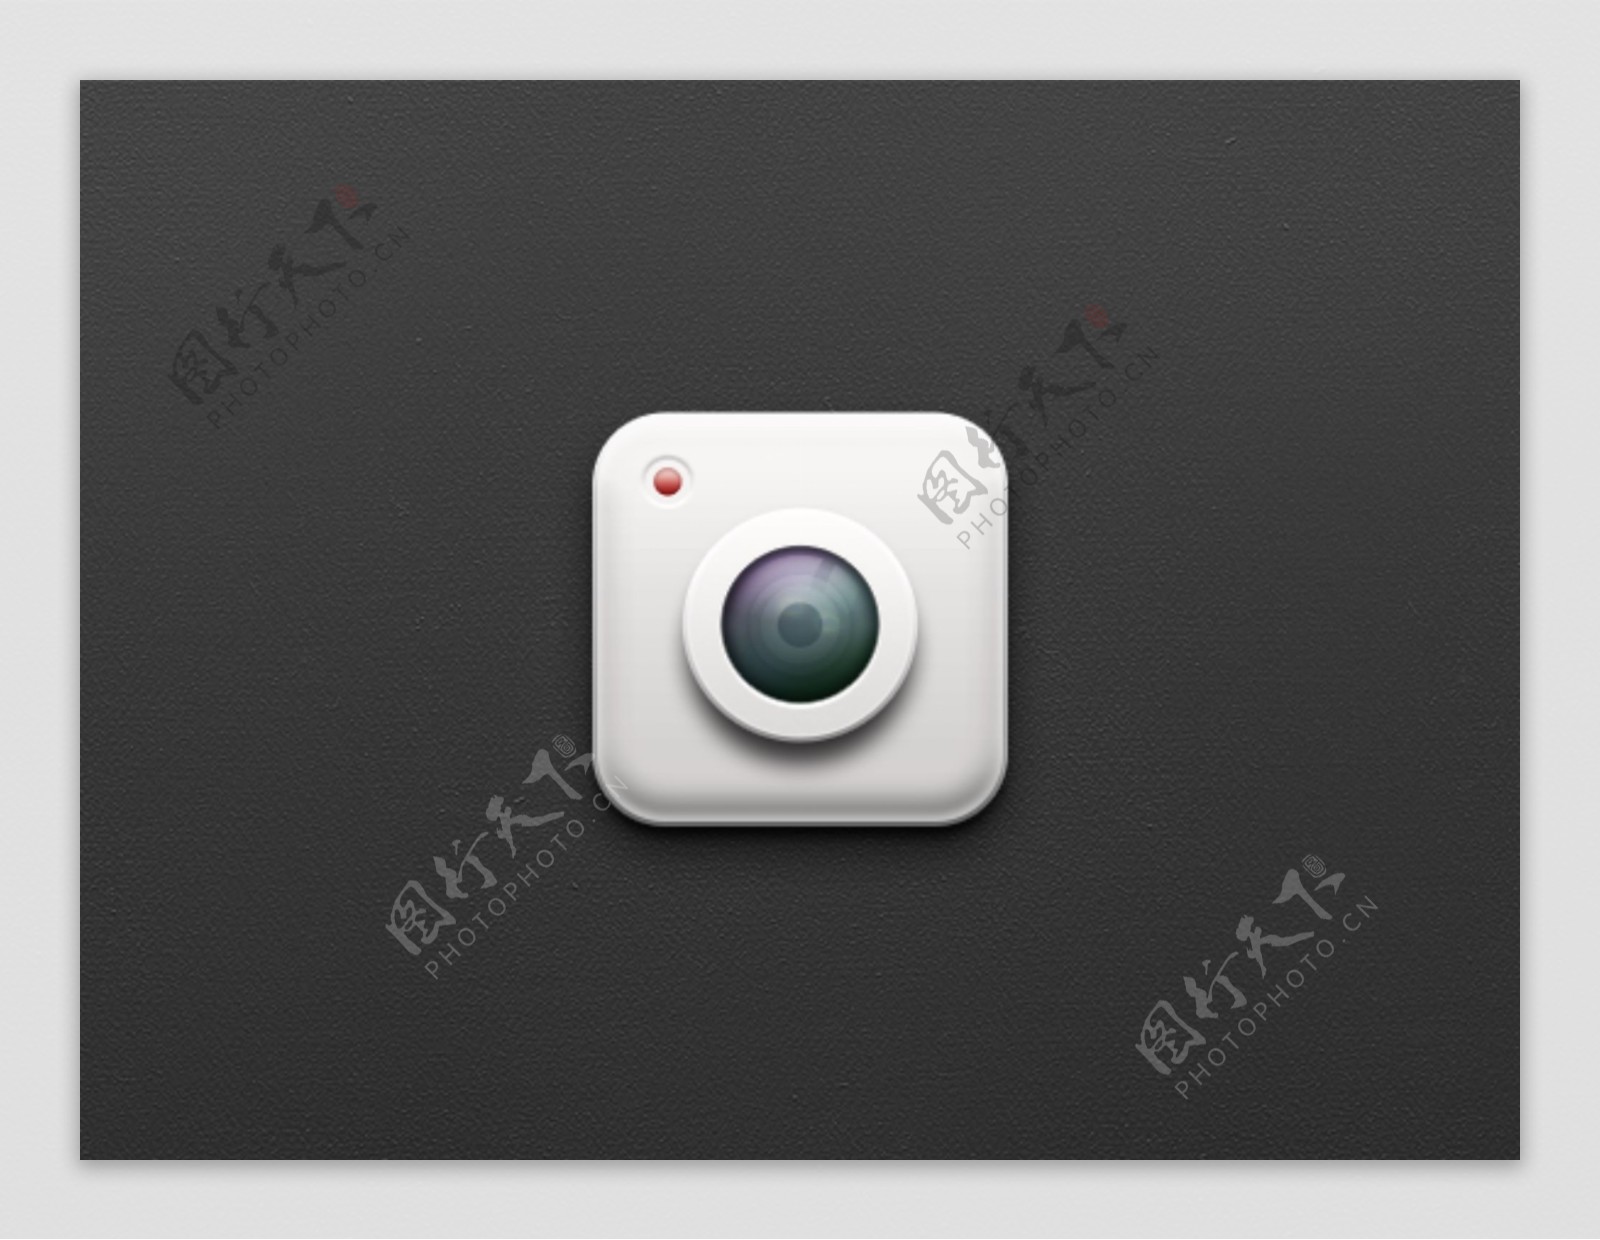 白色相机icon图标设计